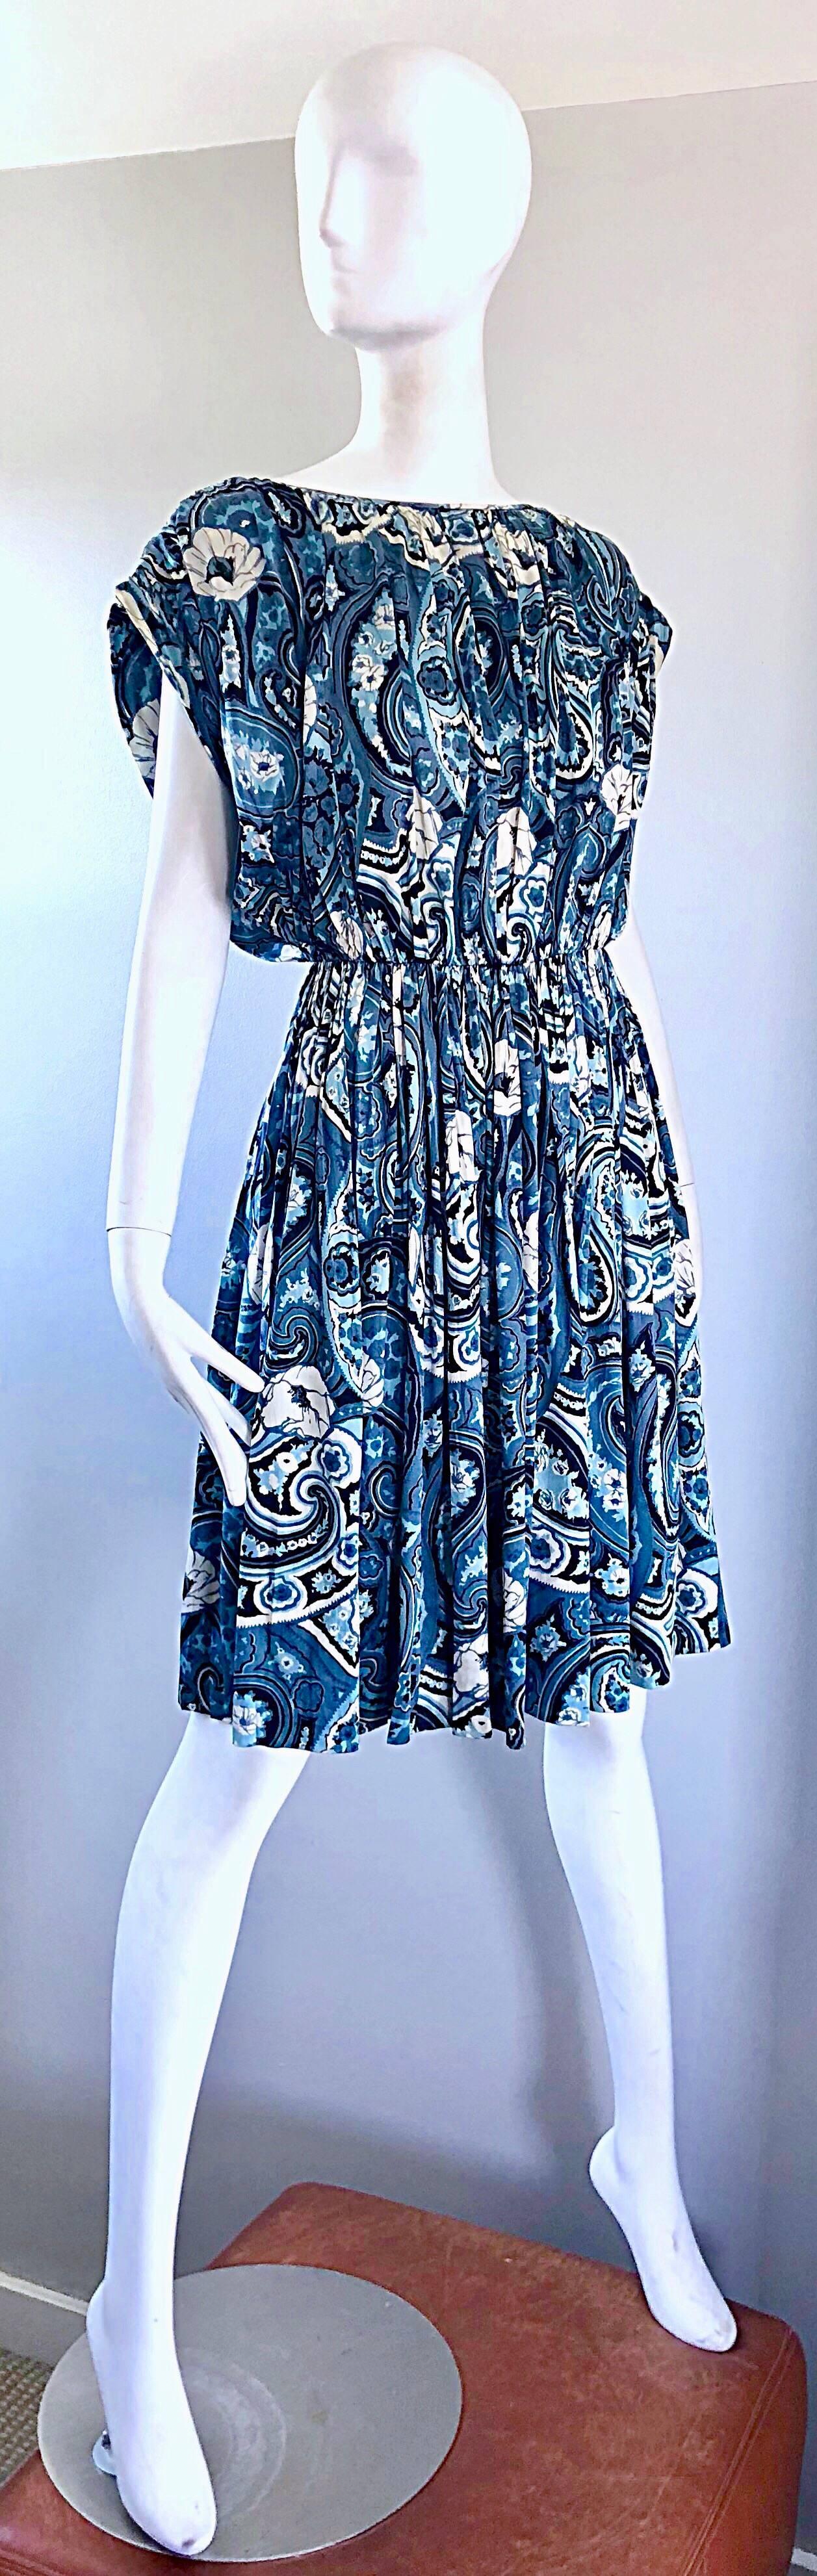 Rare 1970s Townley Blue + White Paisley Flower Print Vintage 70s Dress For Sale 8